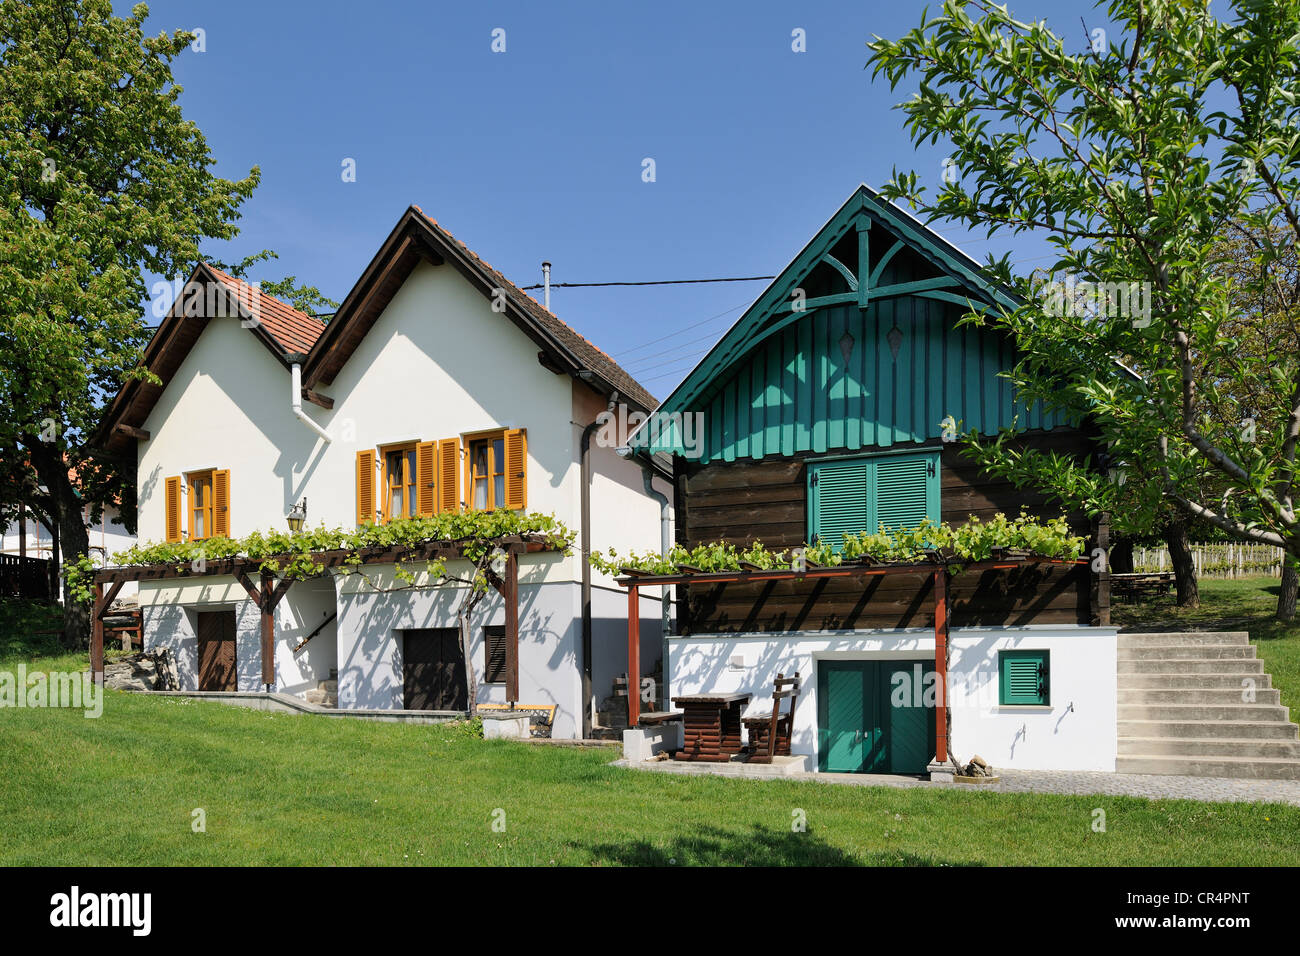 Weinhauer houses on Csaterberg, Kohfidisch, Burgenland, Austria, Europe Stock Photo